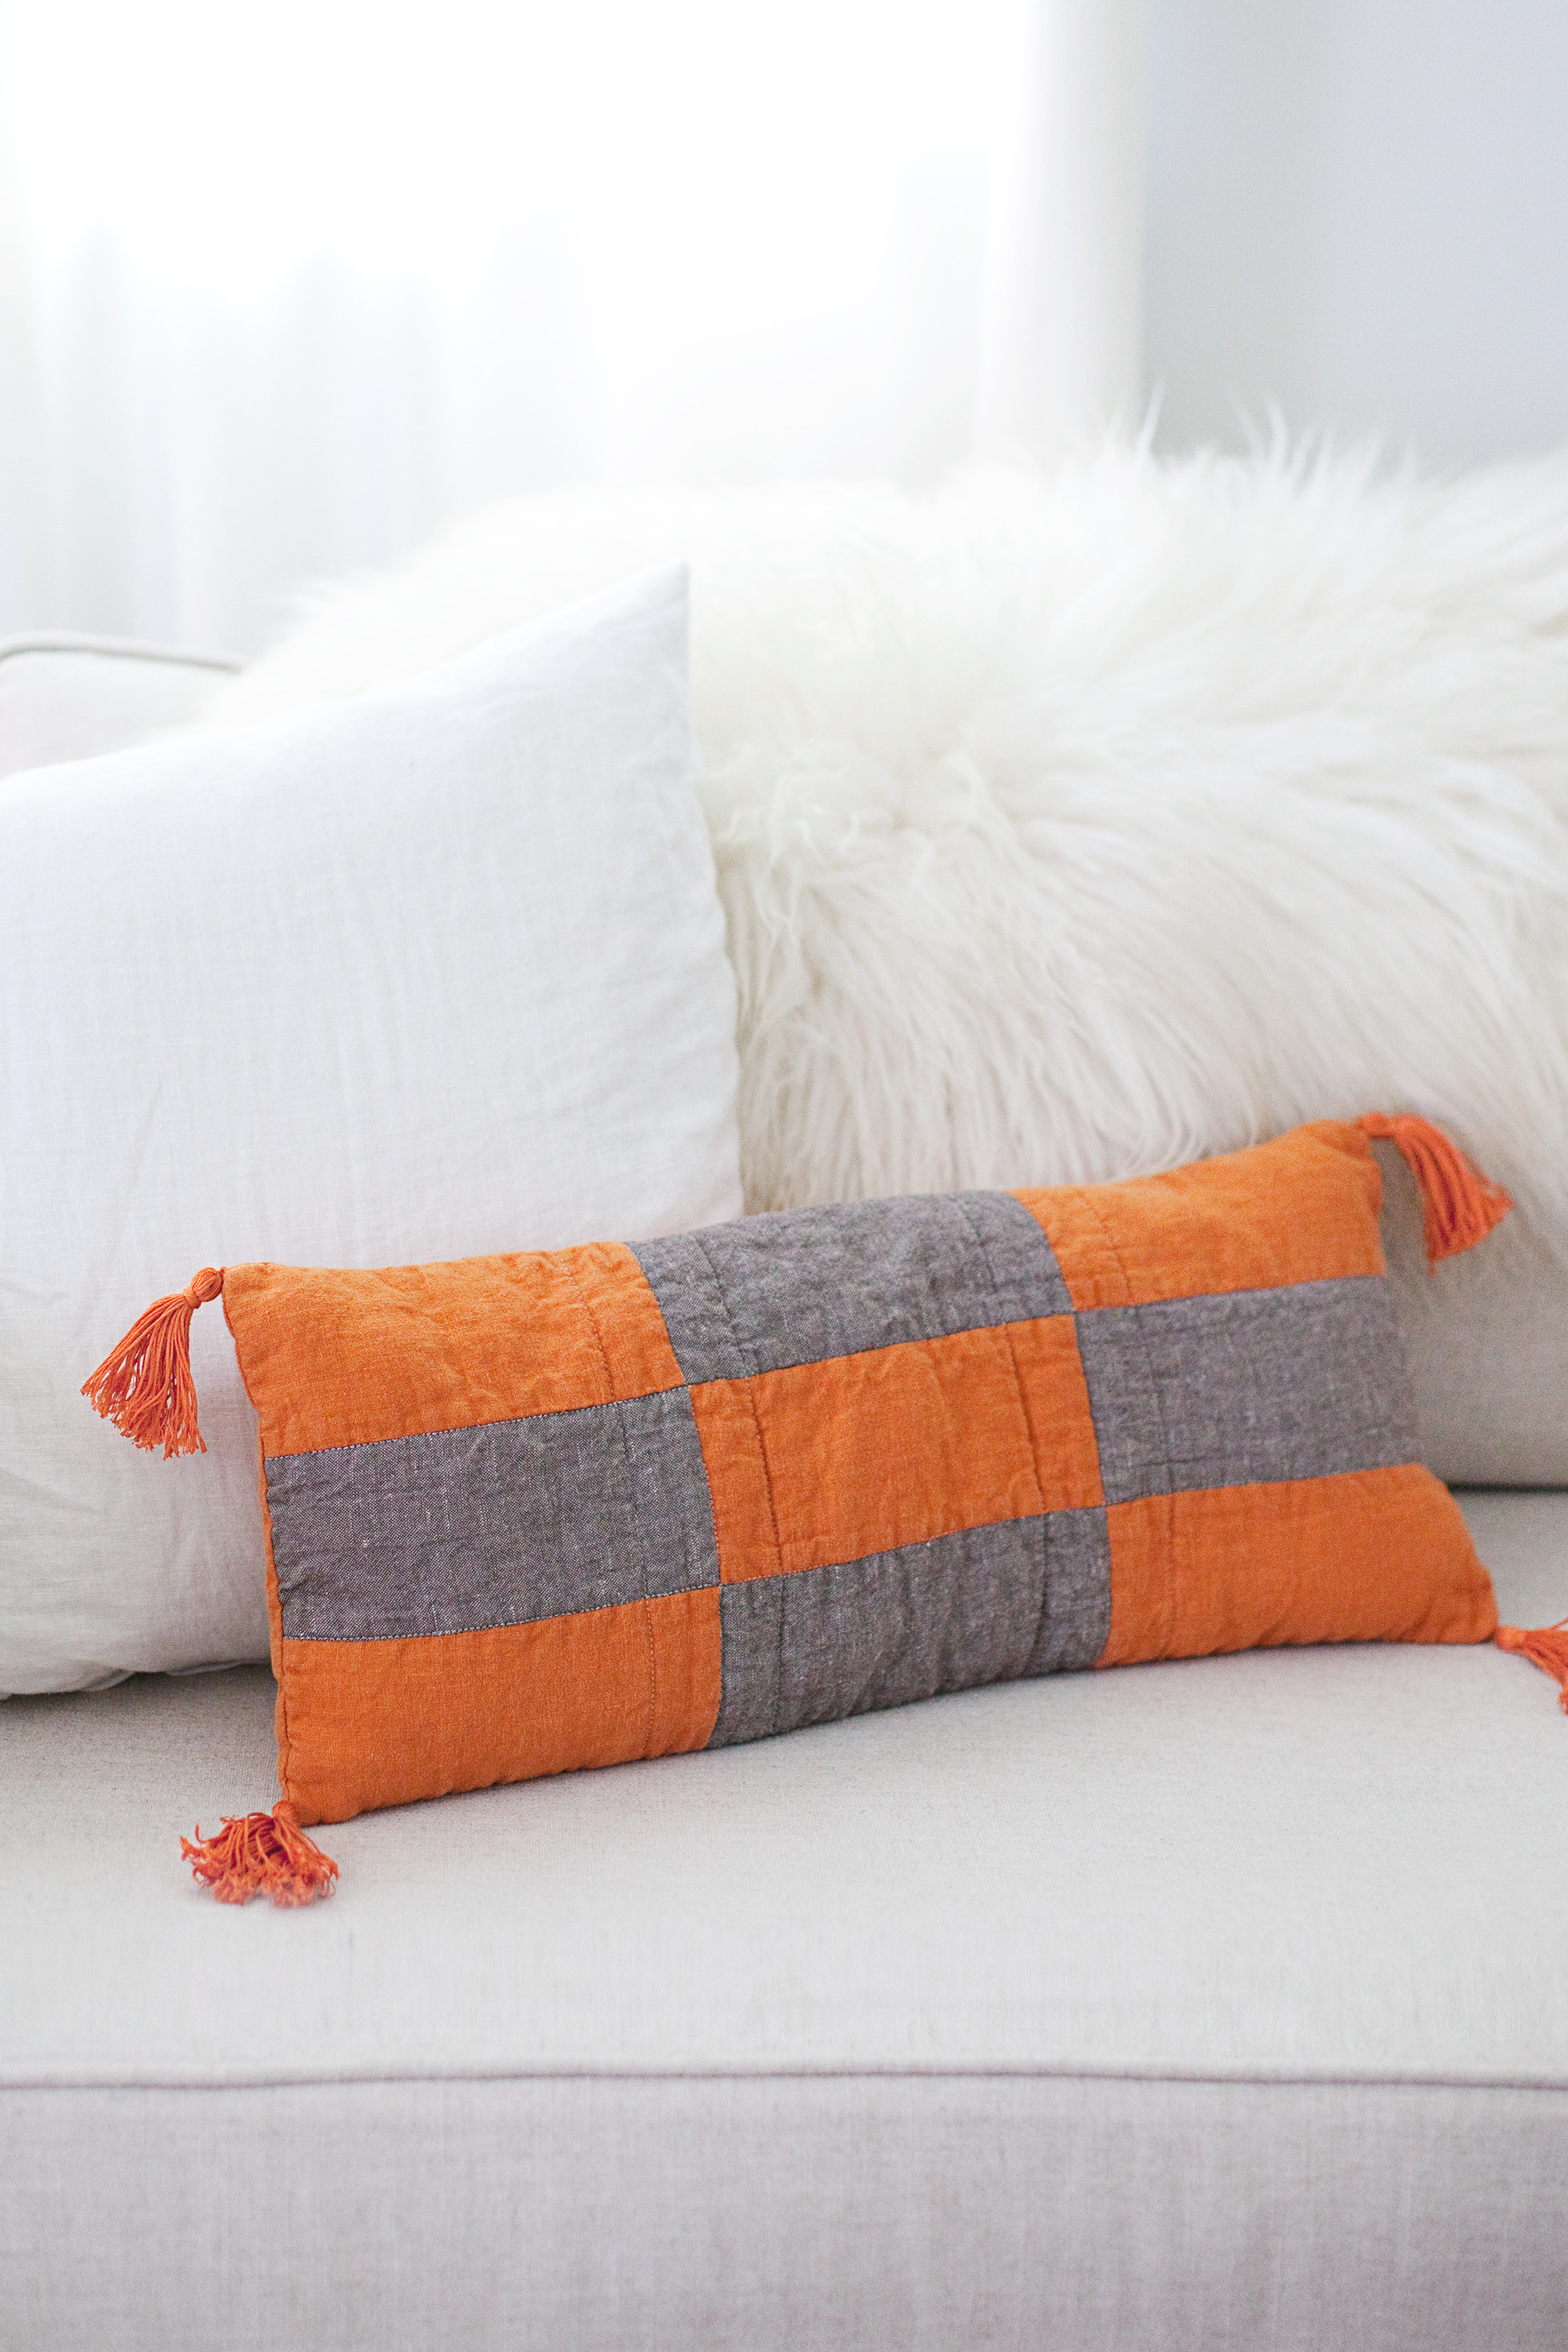 DIY modern patchwork pillow in grey and orange (via abeautifulmess.com)